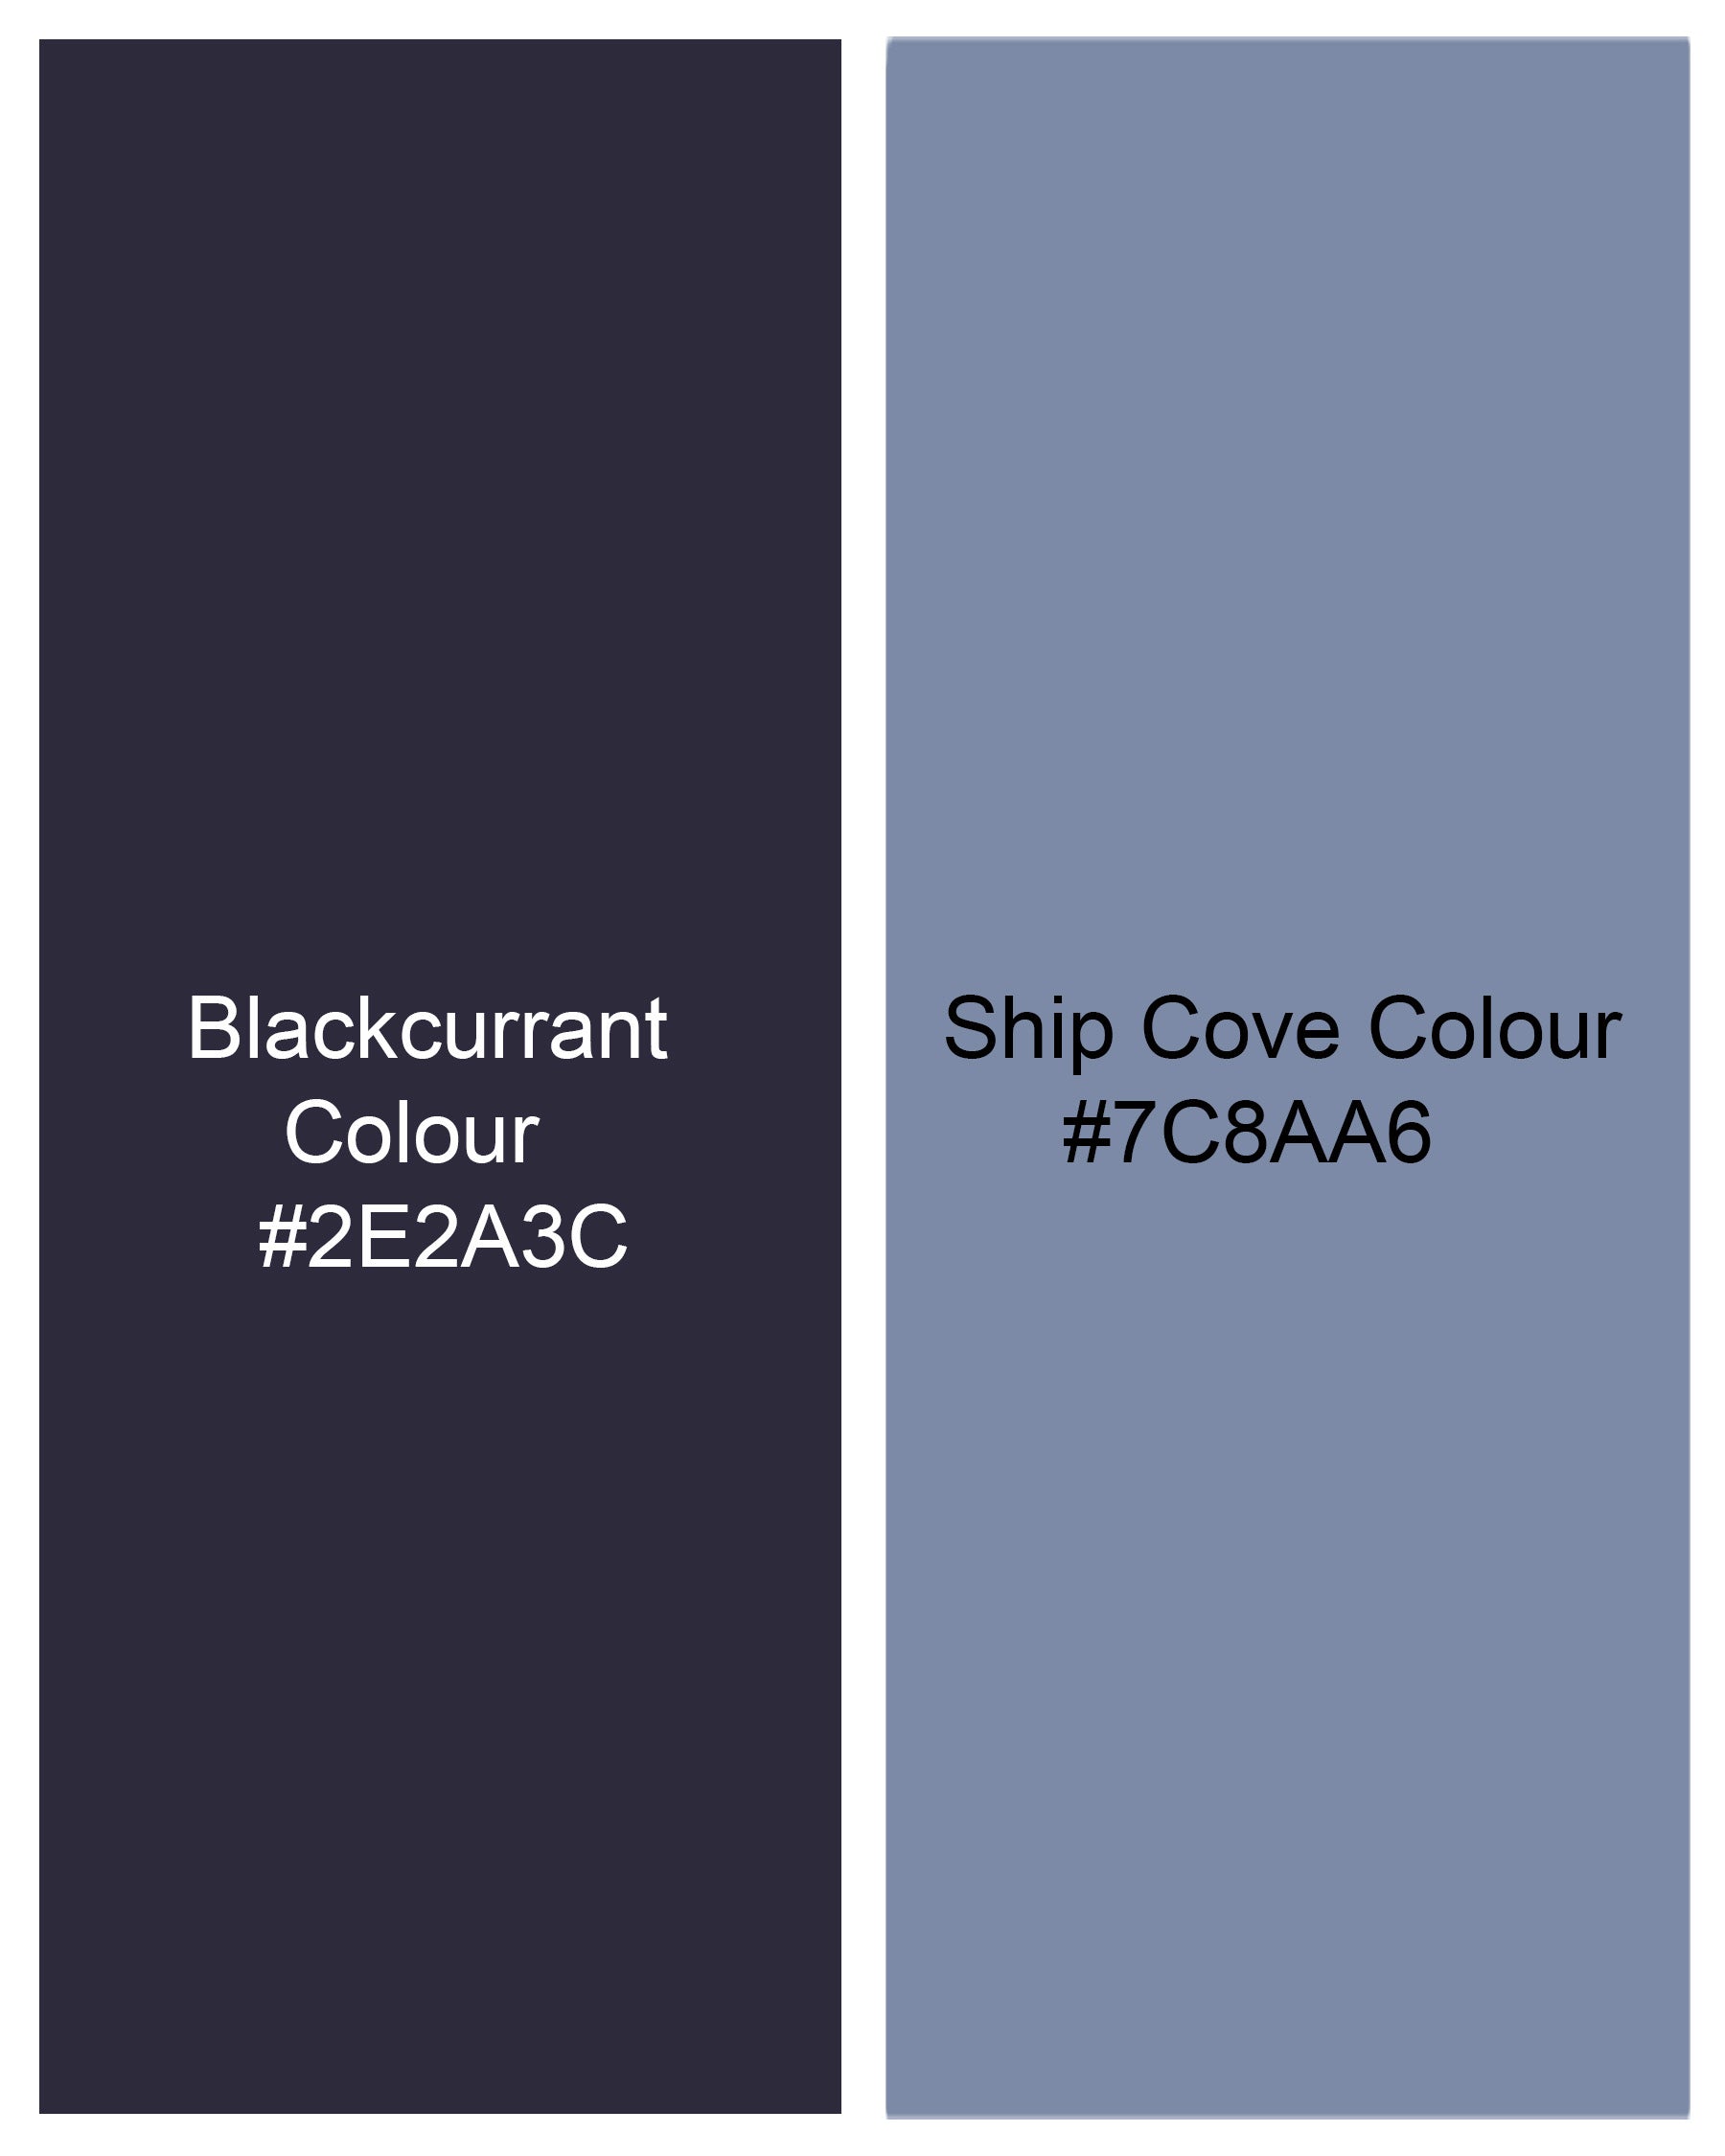 Blackcurrant Navy Blue with Ship Cove Blue Floral Chambray Textured Premium Cotton Shirt 8238-BD-38,8238-BD-H-38,8238-BD-39,8238-BD-H-39,8238-BD-40,8238-BD-H-40,8238-BD-42,8238-BD-H-42,8238-BD-44,8238-BD-H-44,8238-BD-46,8238-BD-H-46,8238-BD-48,8238-BD-H-48,8238-BD-50,8238-BD-H-50,8238-BD-52,8238-BD-H-52